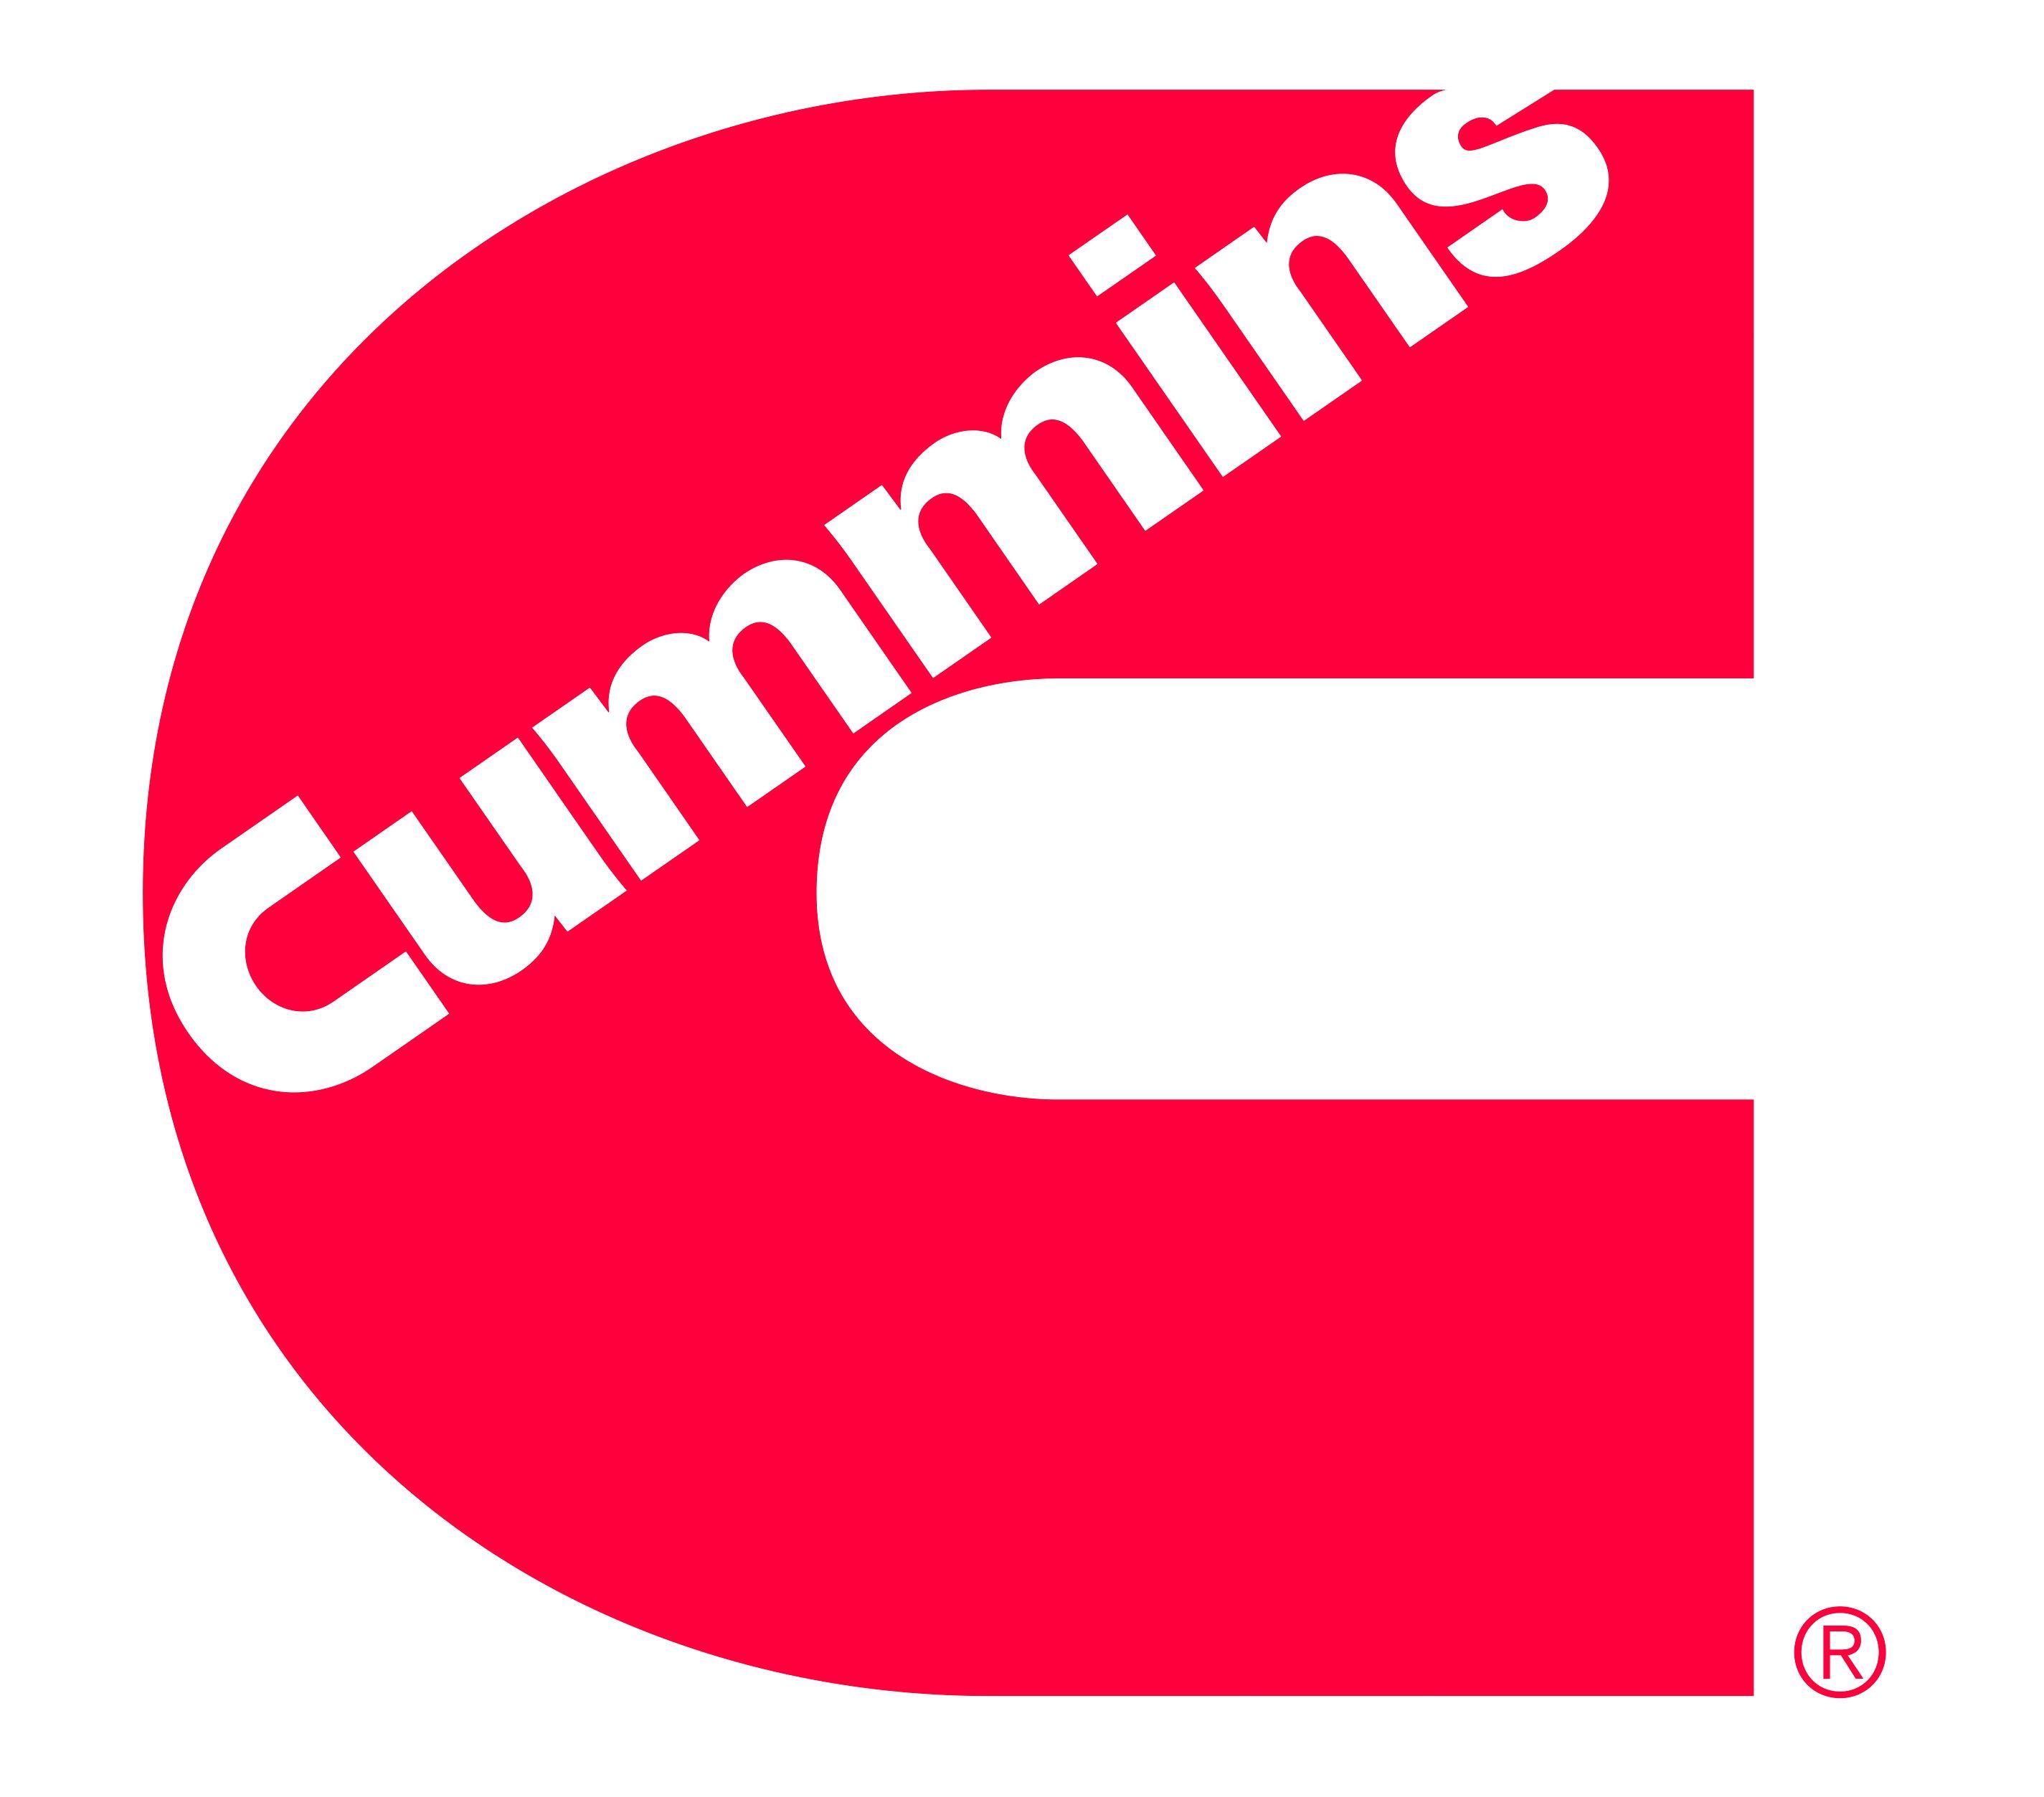 Current Company Logo - Cummins Logo, Cummins Symbol, Meaning, History and Evolution